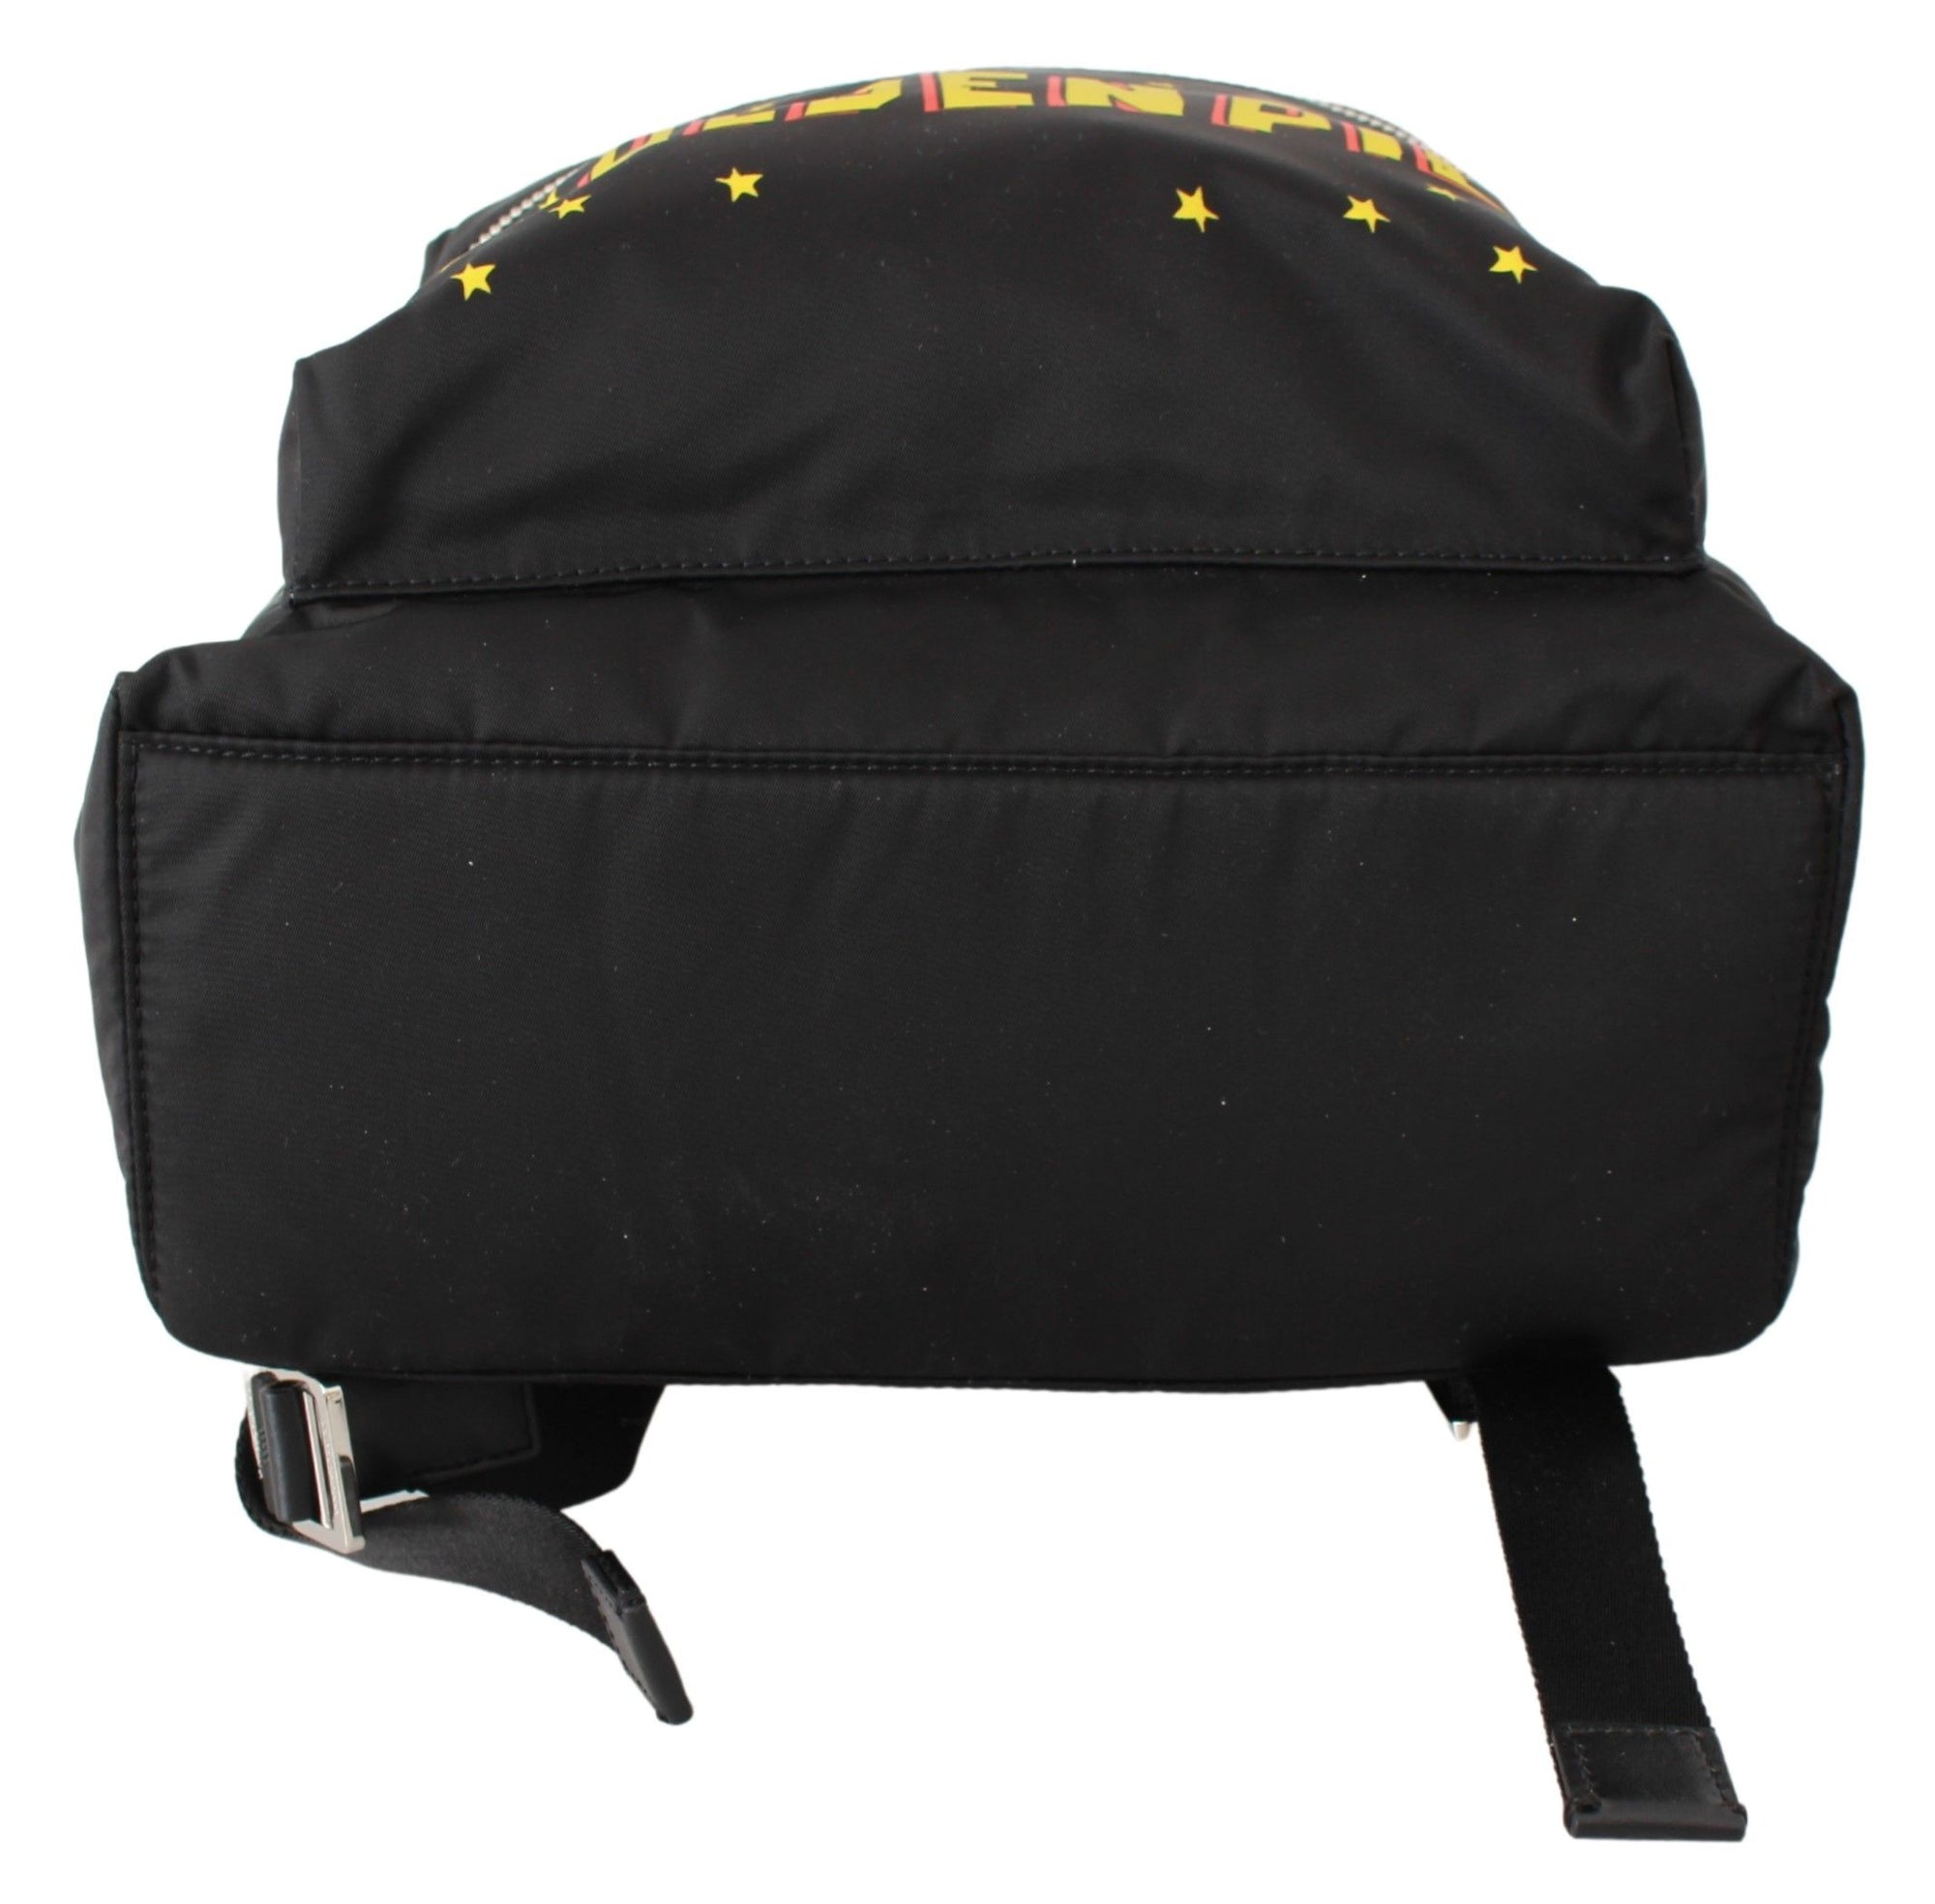 Golden Pig Motif Luxe Backpack